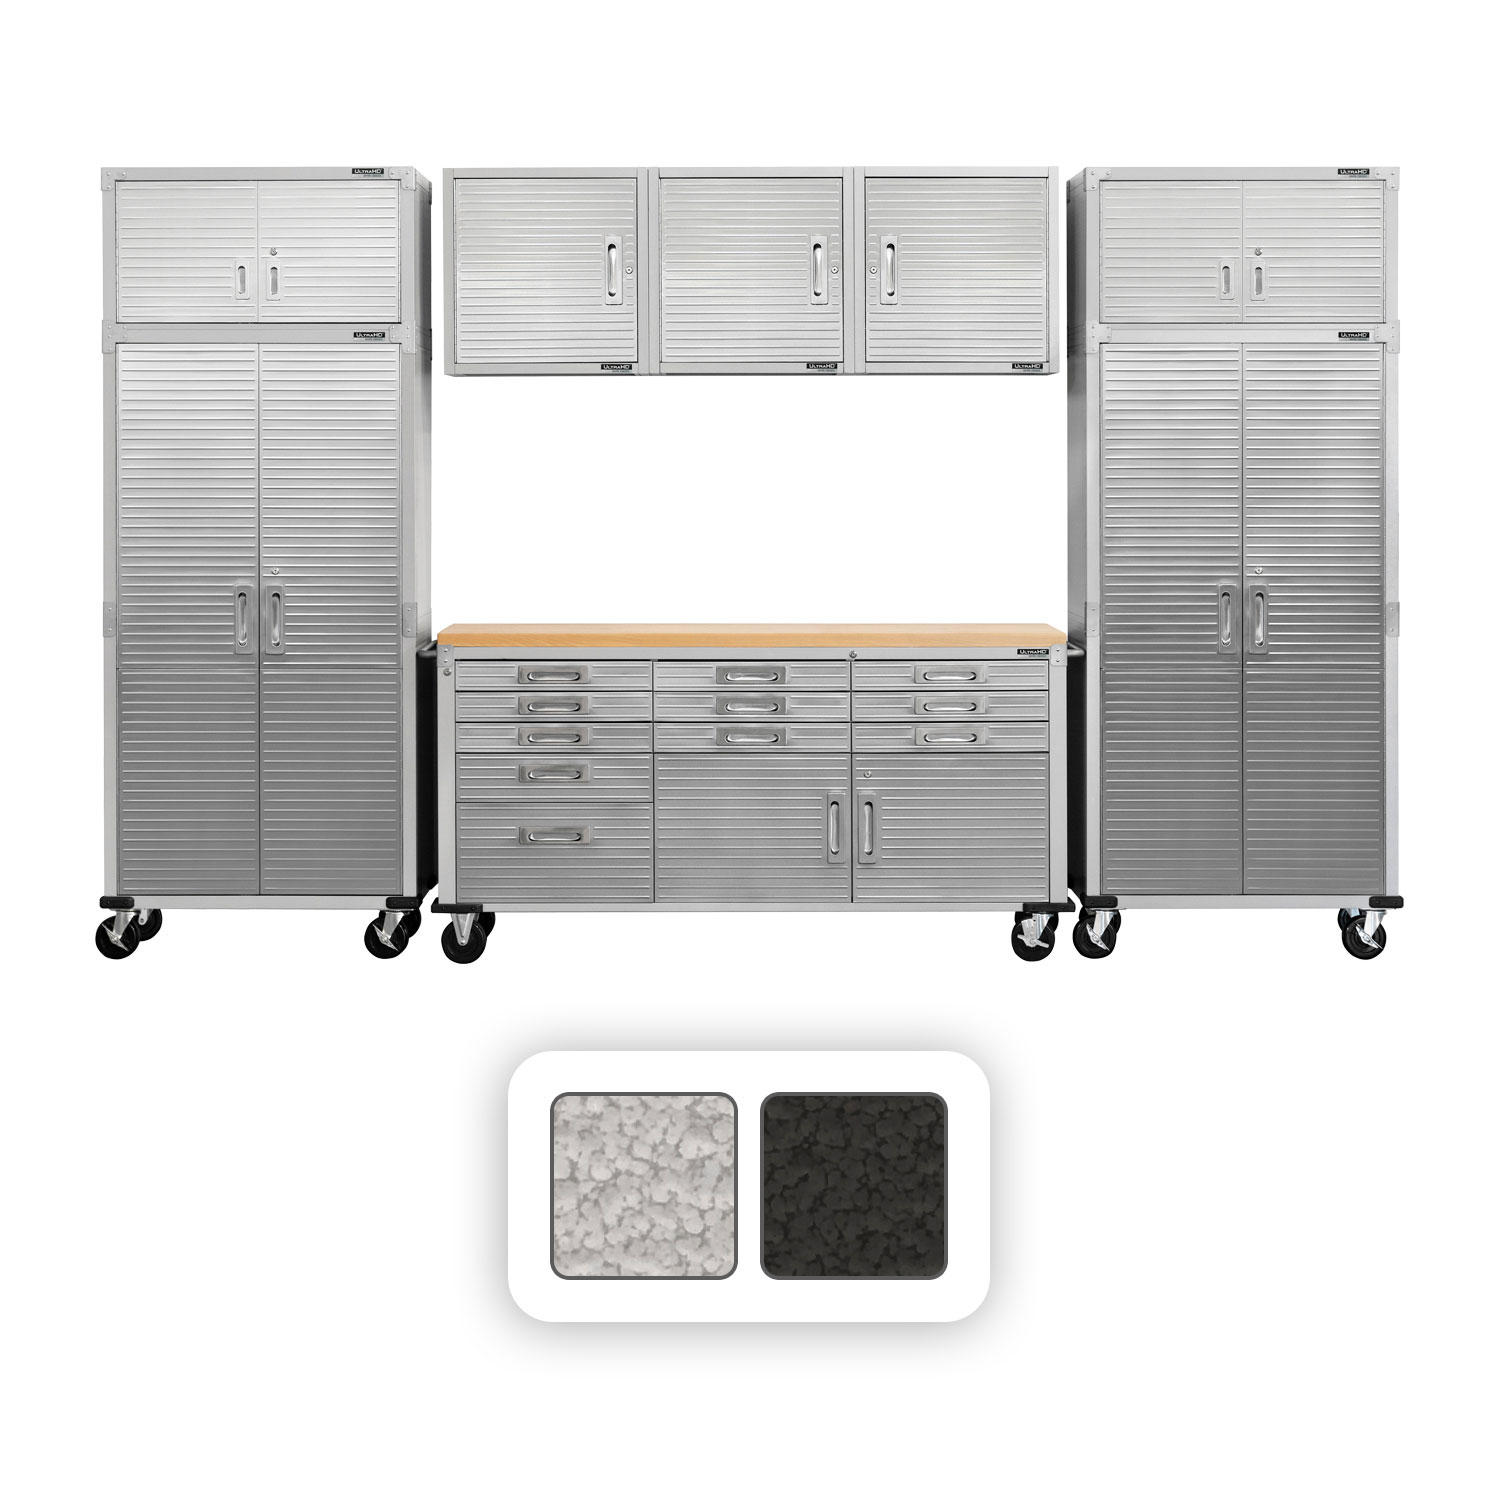 Seville Classics UltraHD 8-Piece Steel Garage Cabinet Storage Set with Rolling Workbench, 12 Feet Wide - Granite